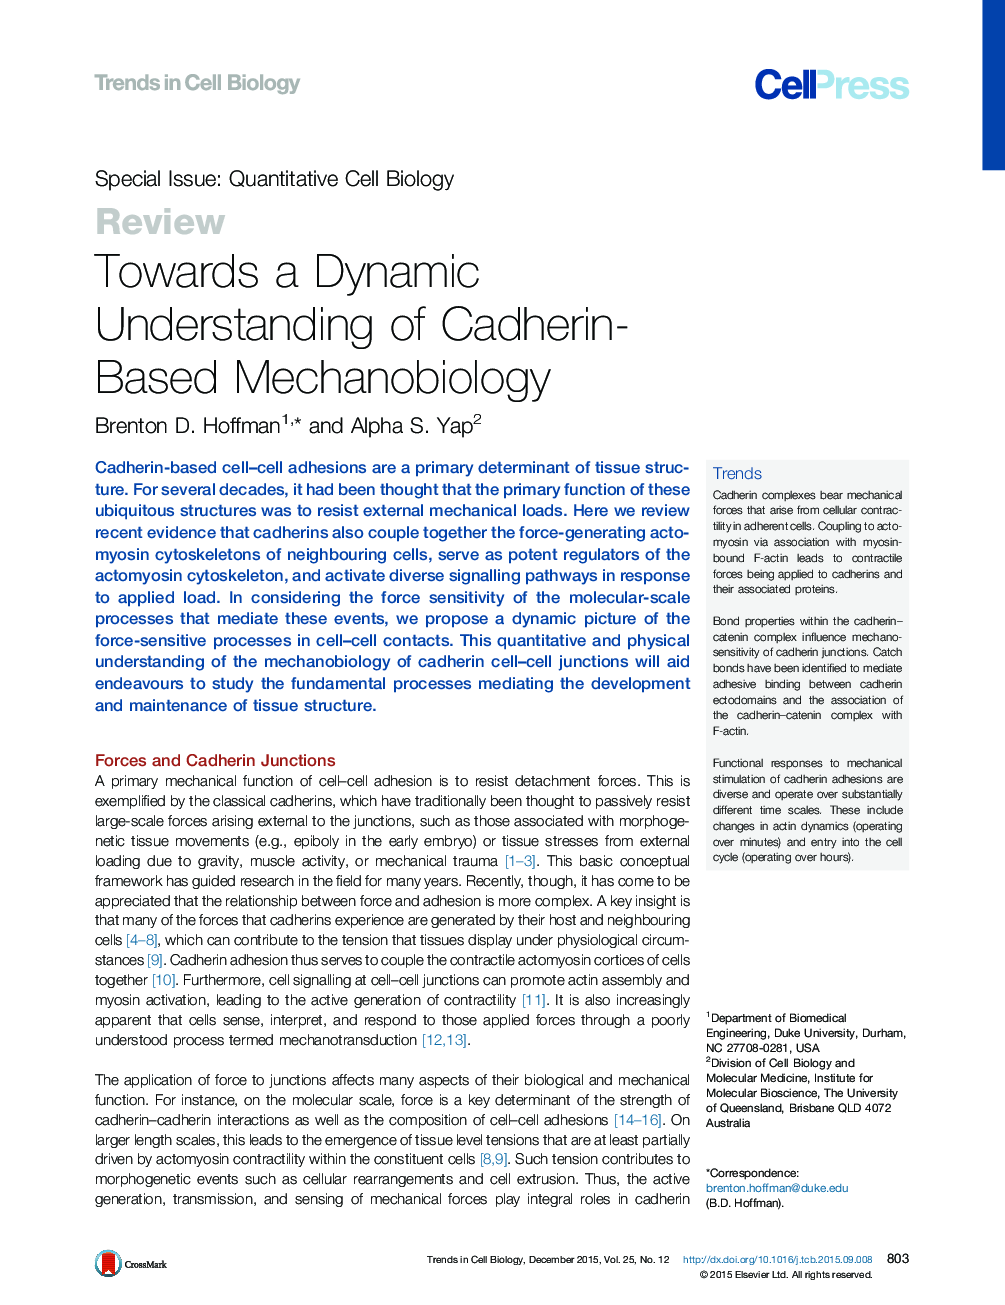 Towards a Dynamic Understanding of Cadherin-Based Mechanobiology